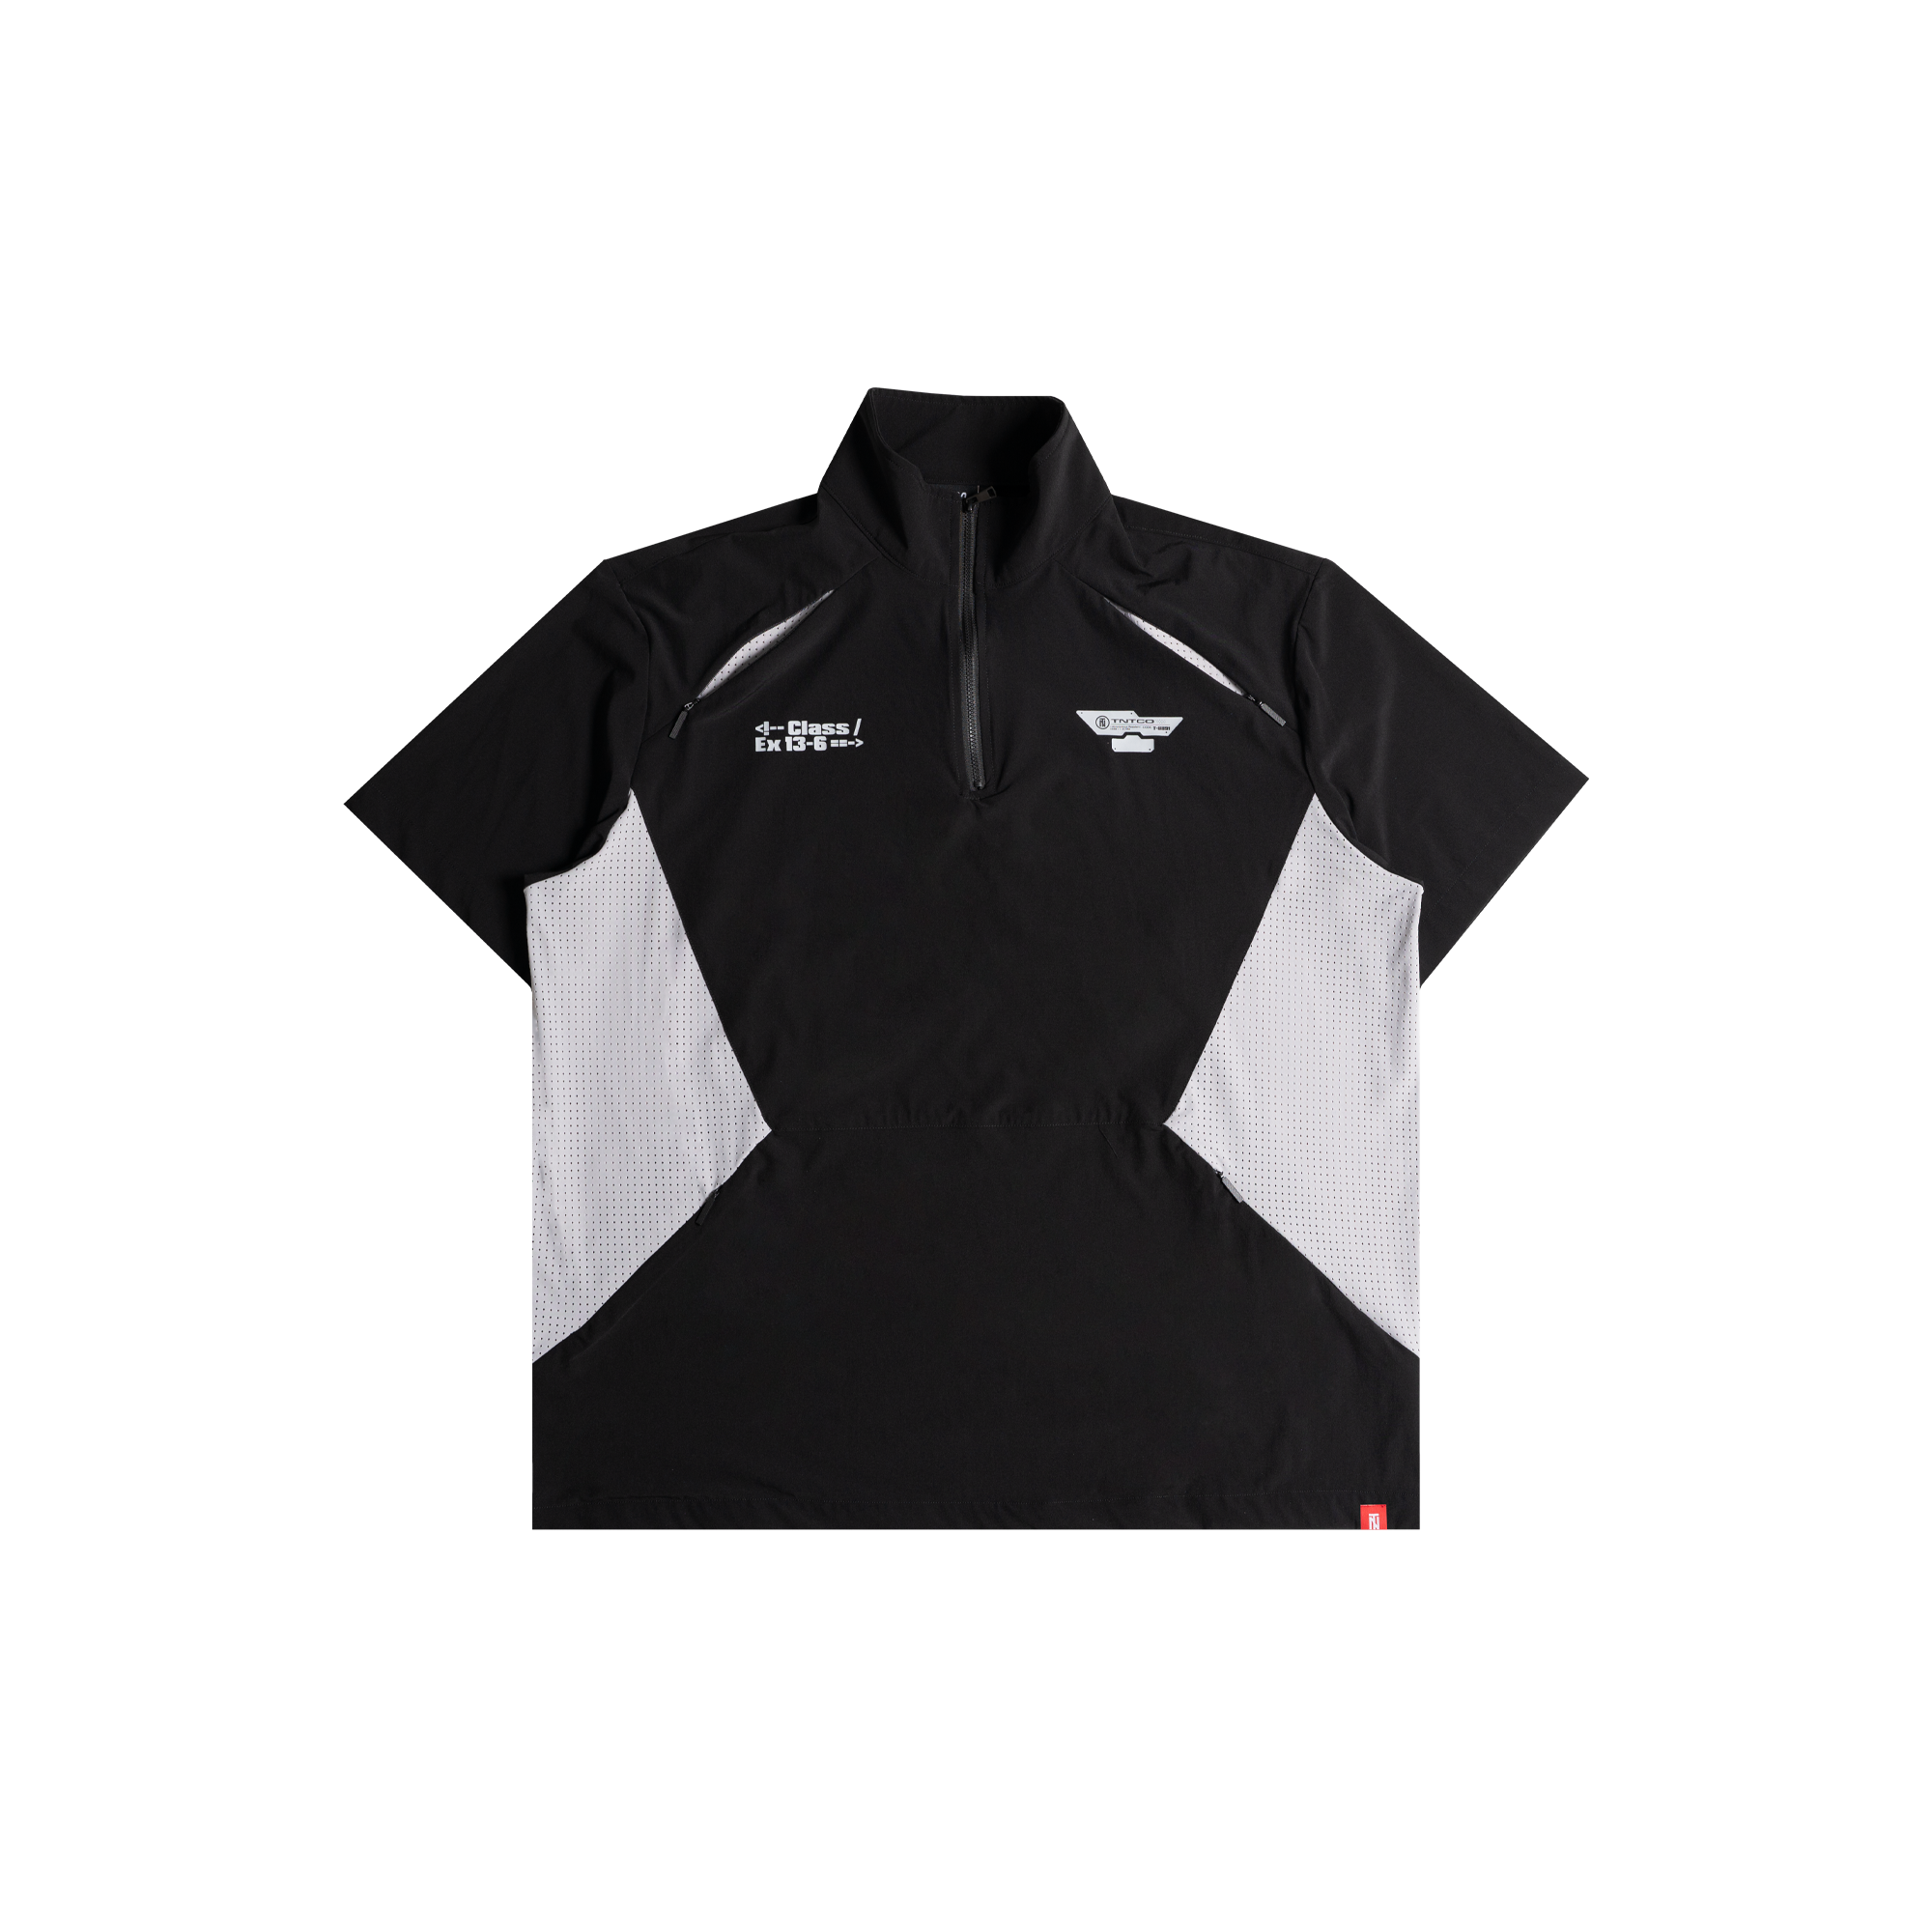 TNTCO | TECHNORA Shirt Black